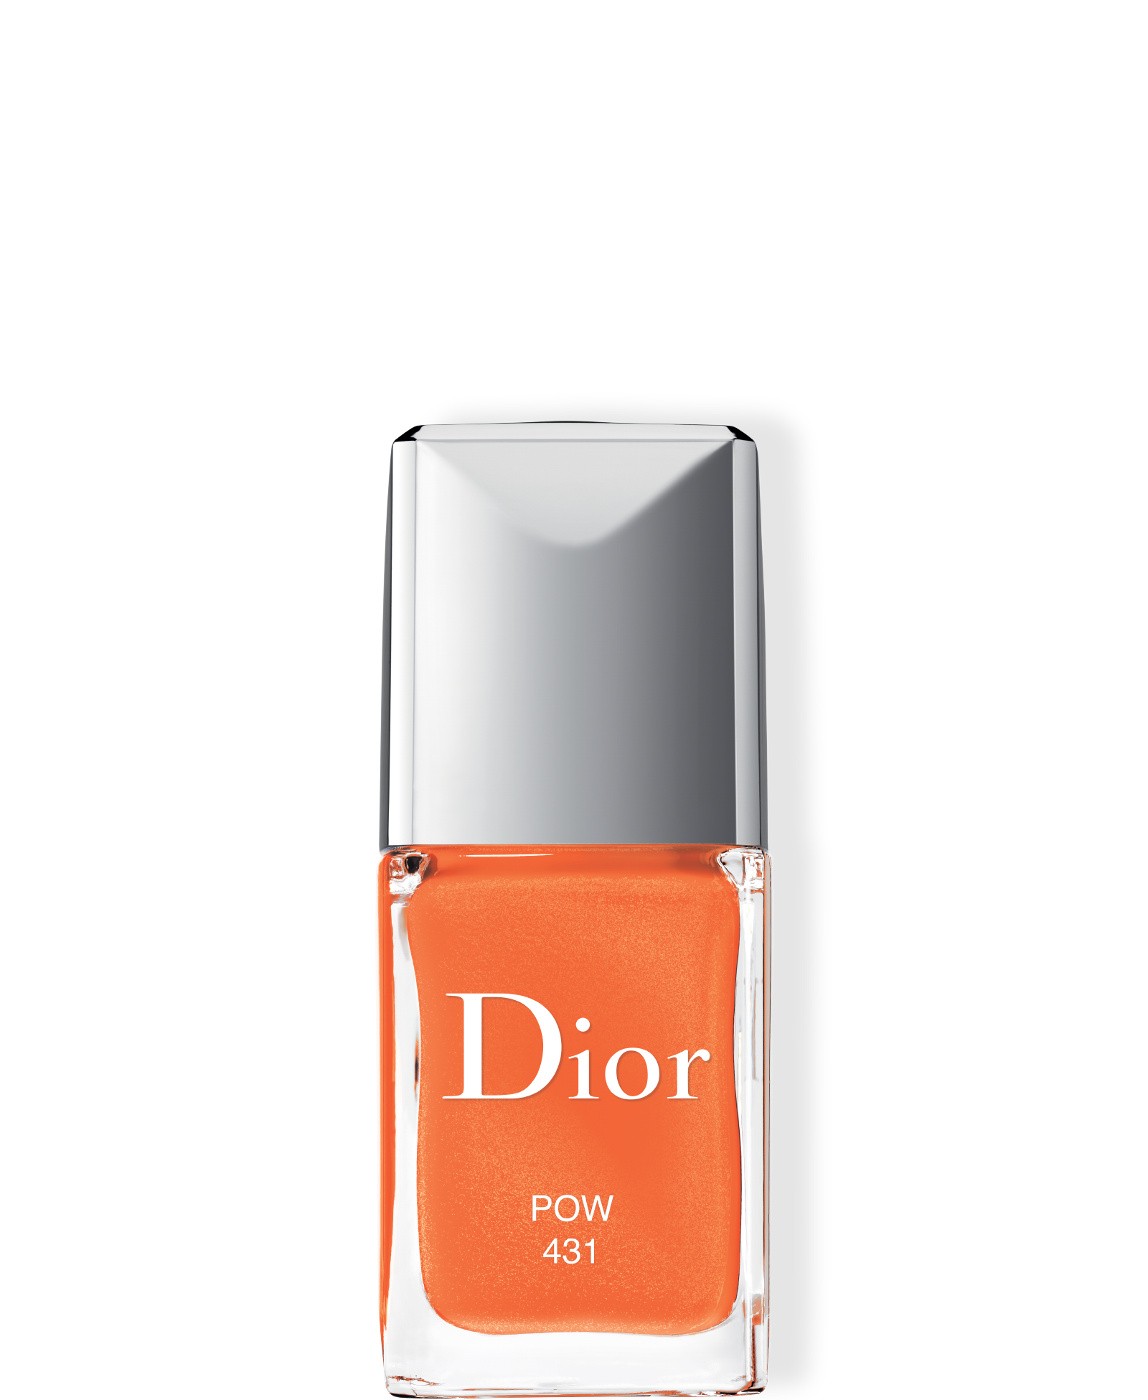 DIOR Women's 'Dior Vernis - No. 431 Pow' Nail Polish 10ml